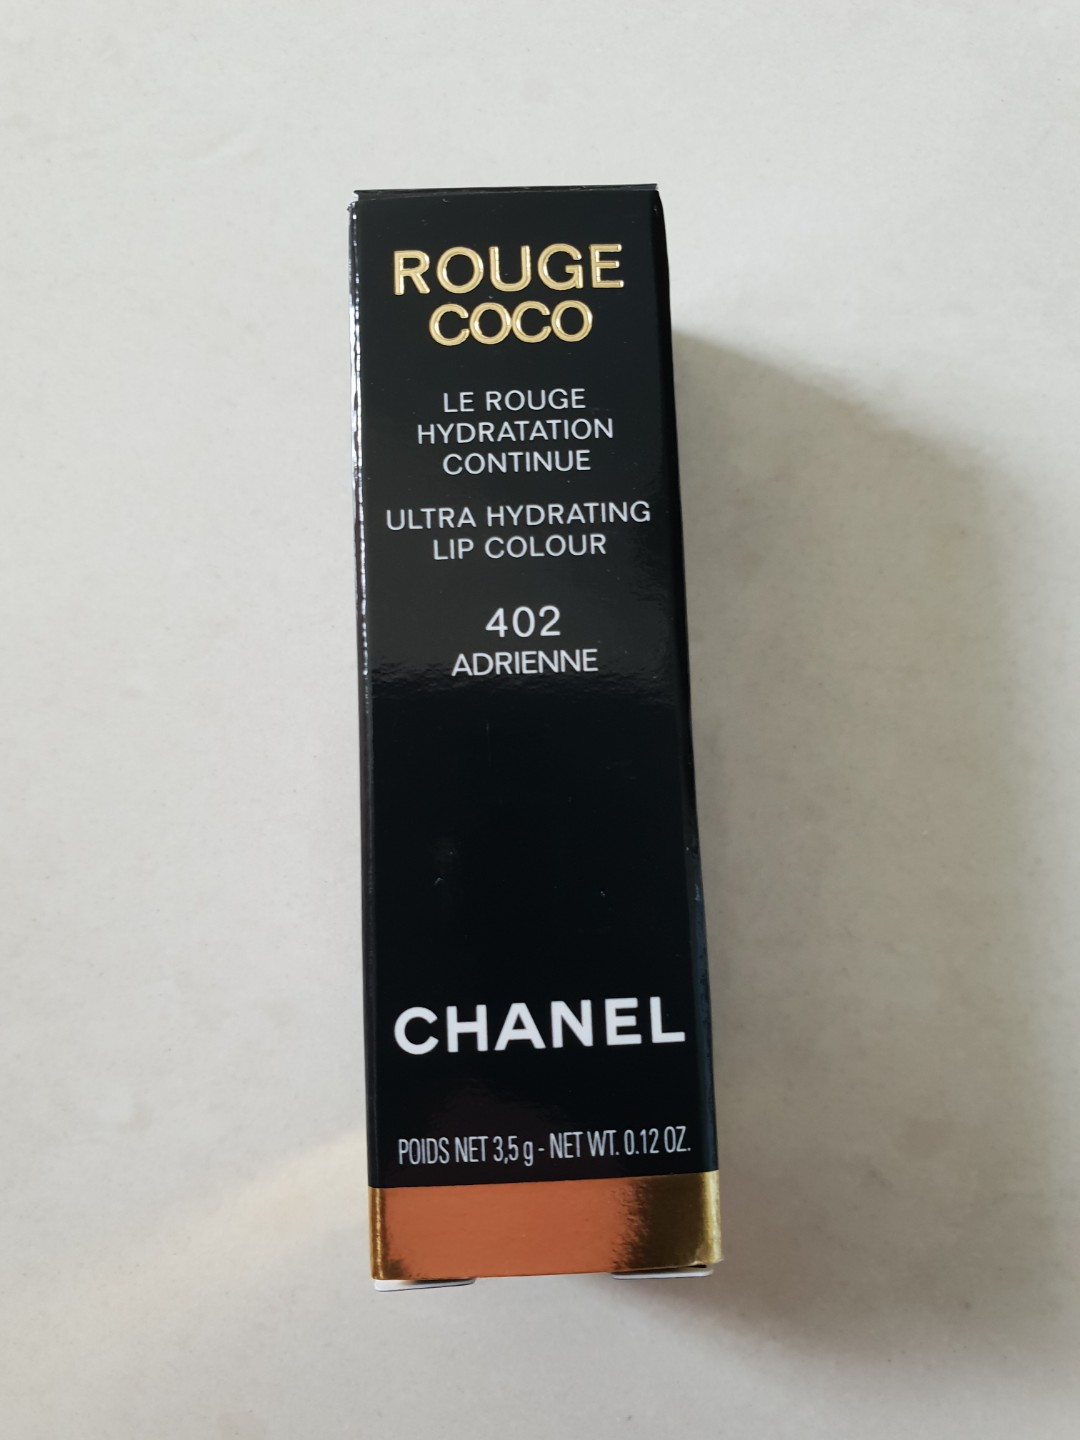  Lipstick - Chanel / Lipstick / Lip Makeup: Beauty